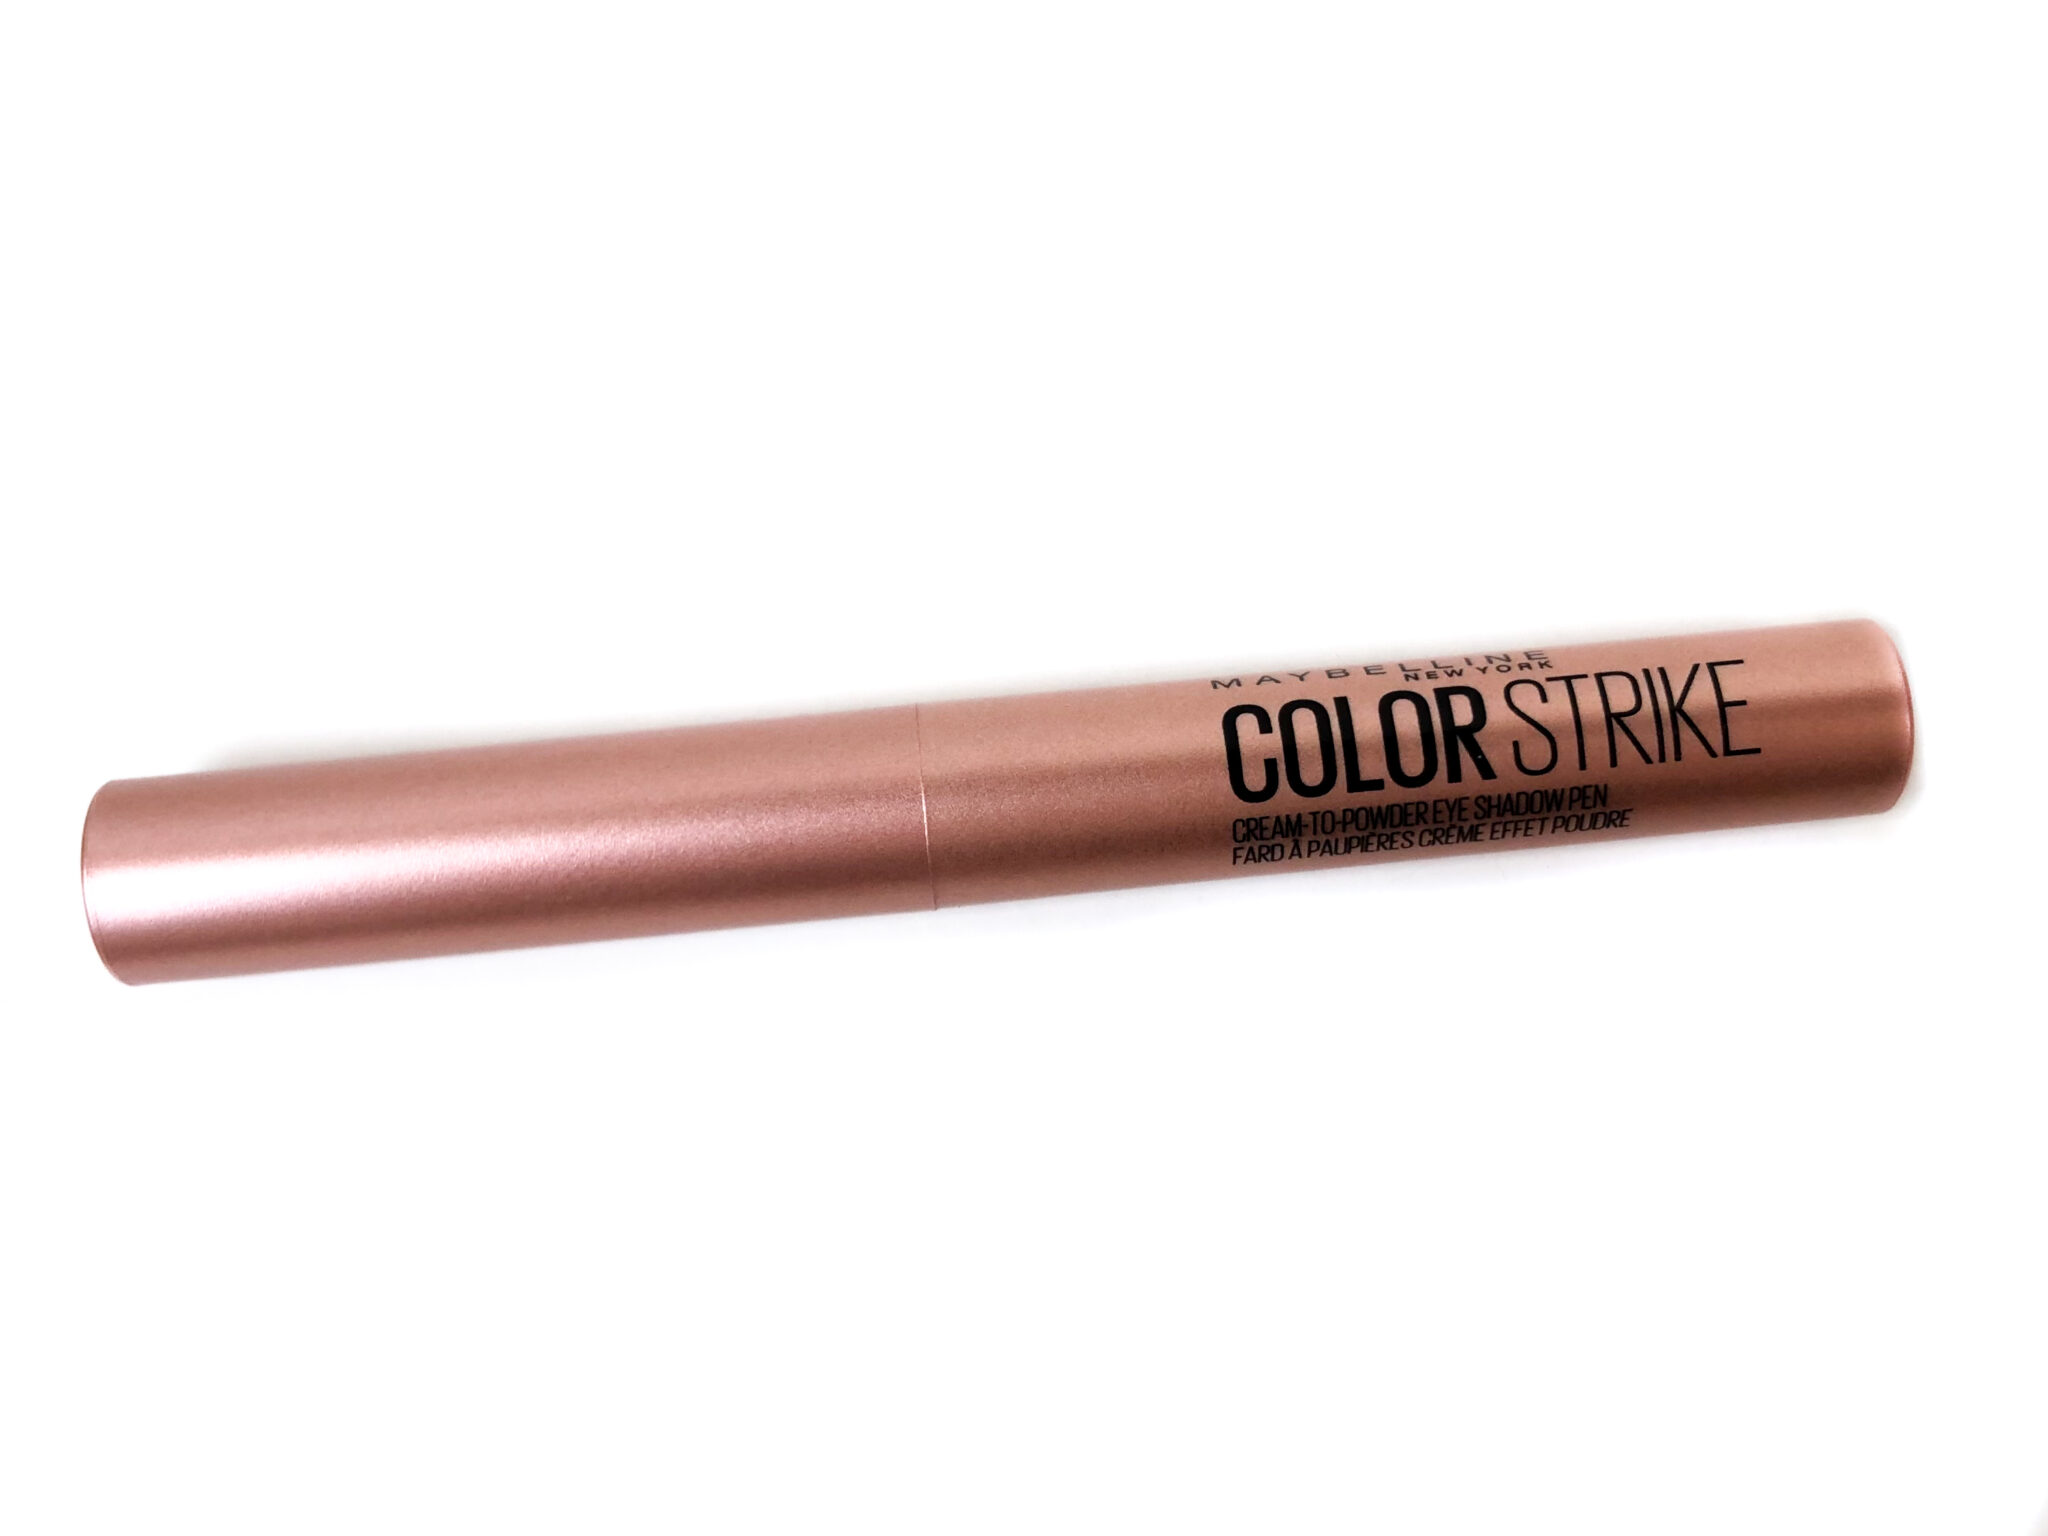 Maybelline Spark Color Strike CreamtoPowder Eyeshadow